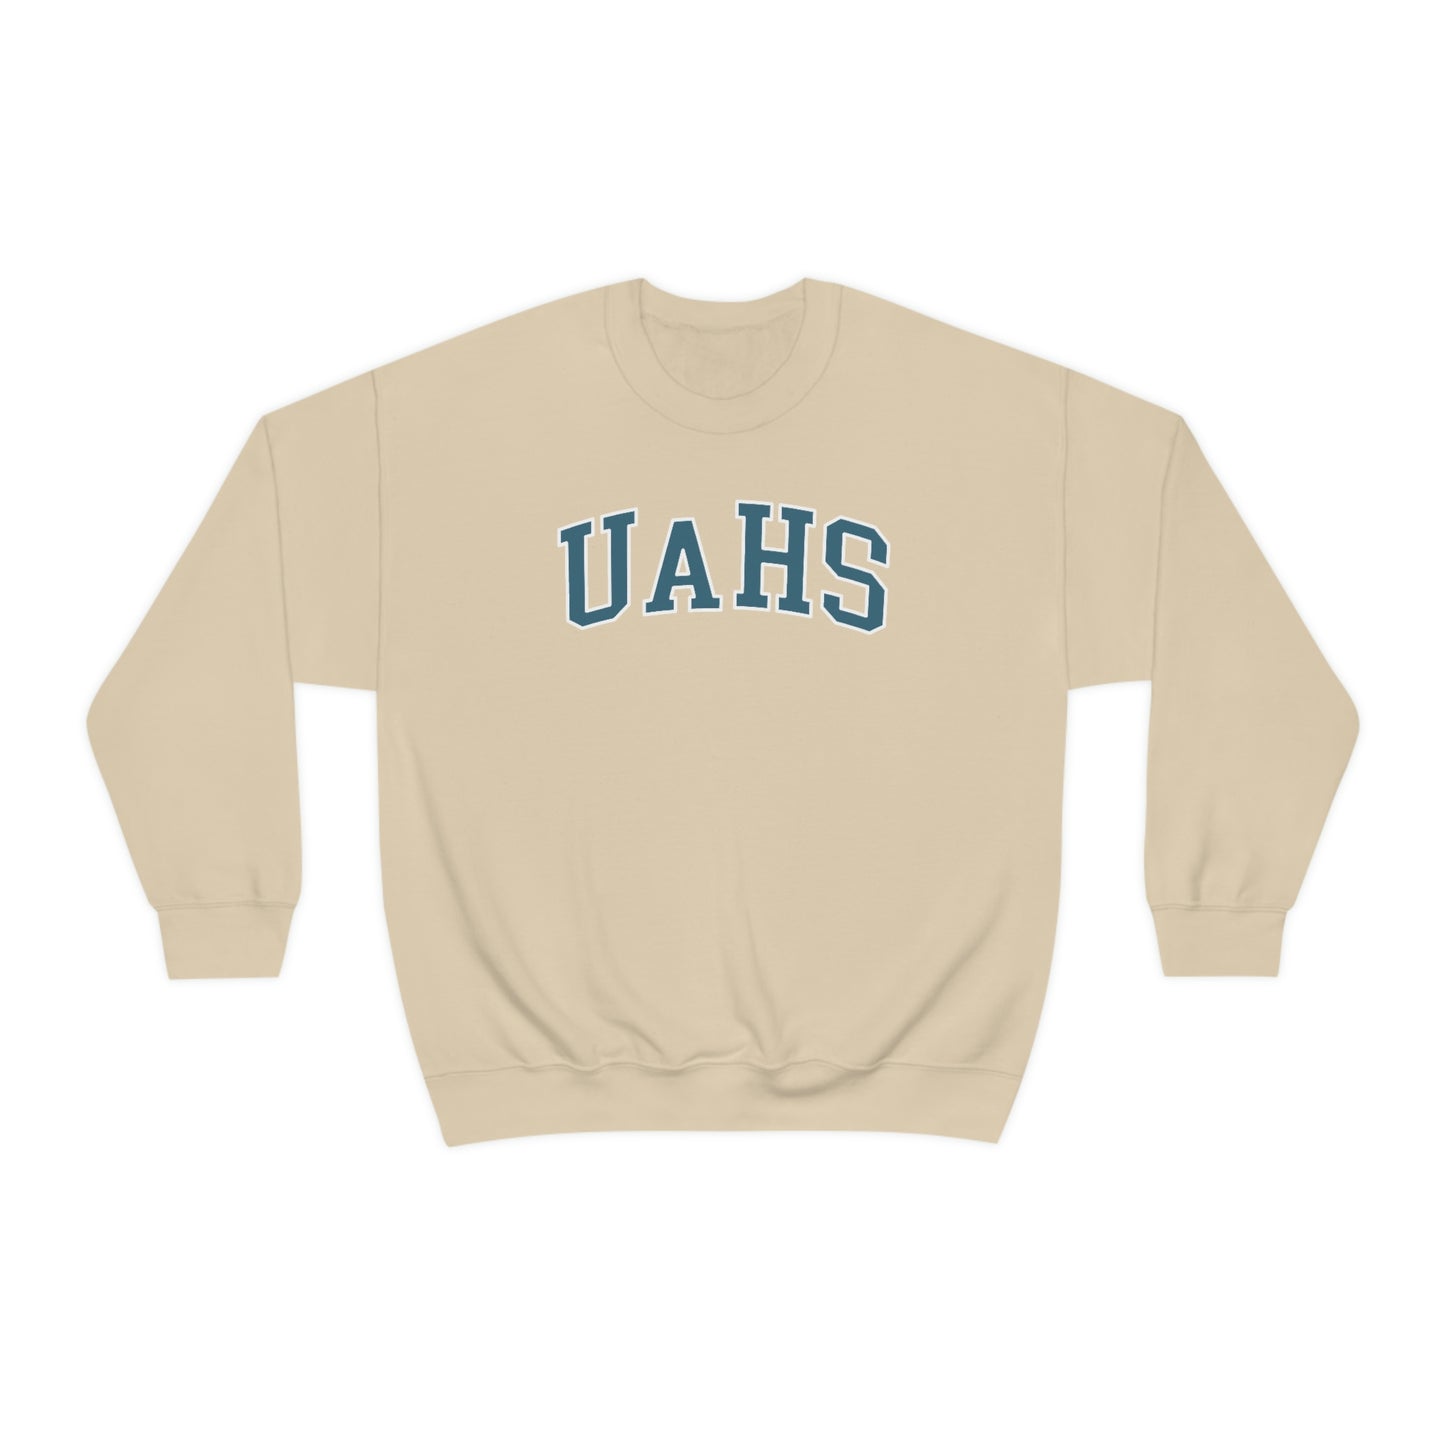 U A High UAHS sweatshirt jumper pullover